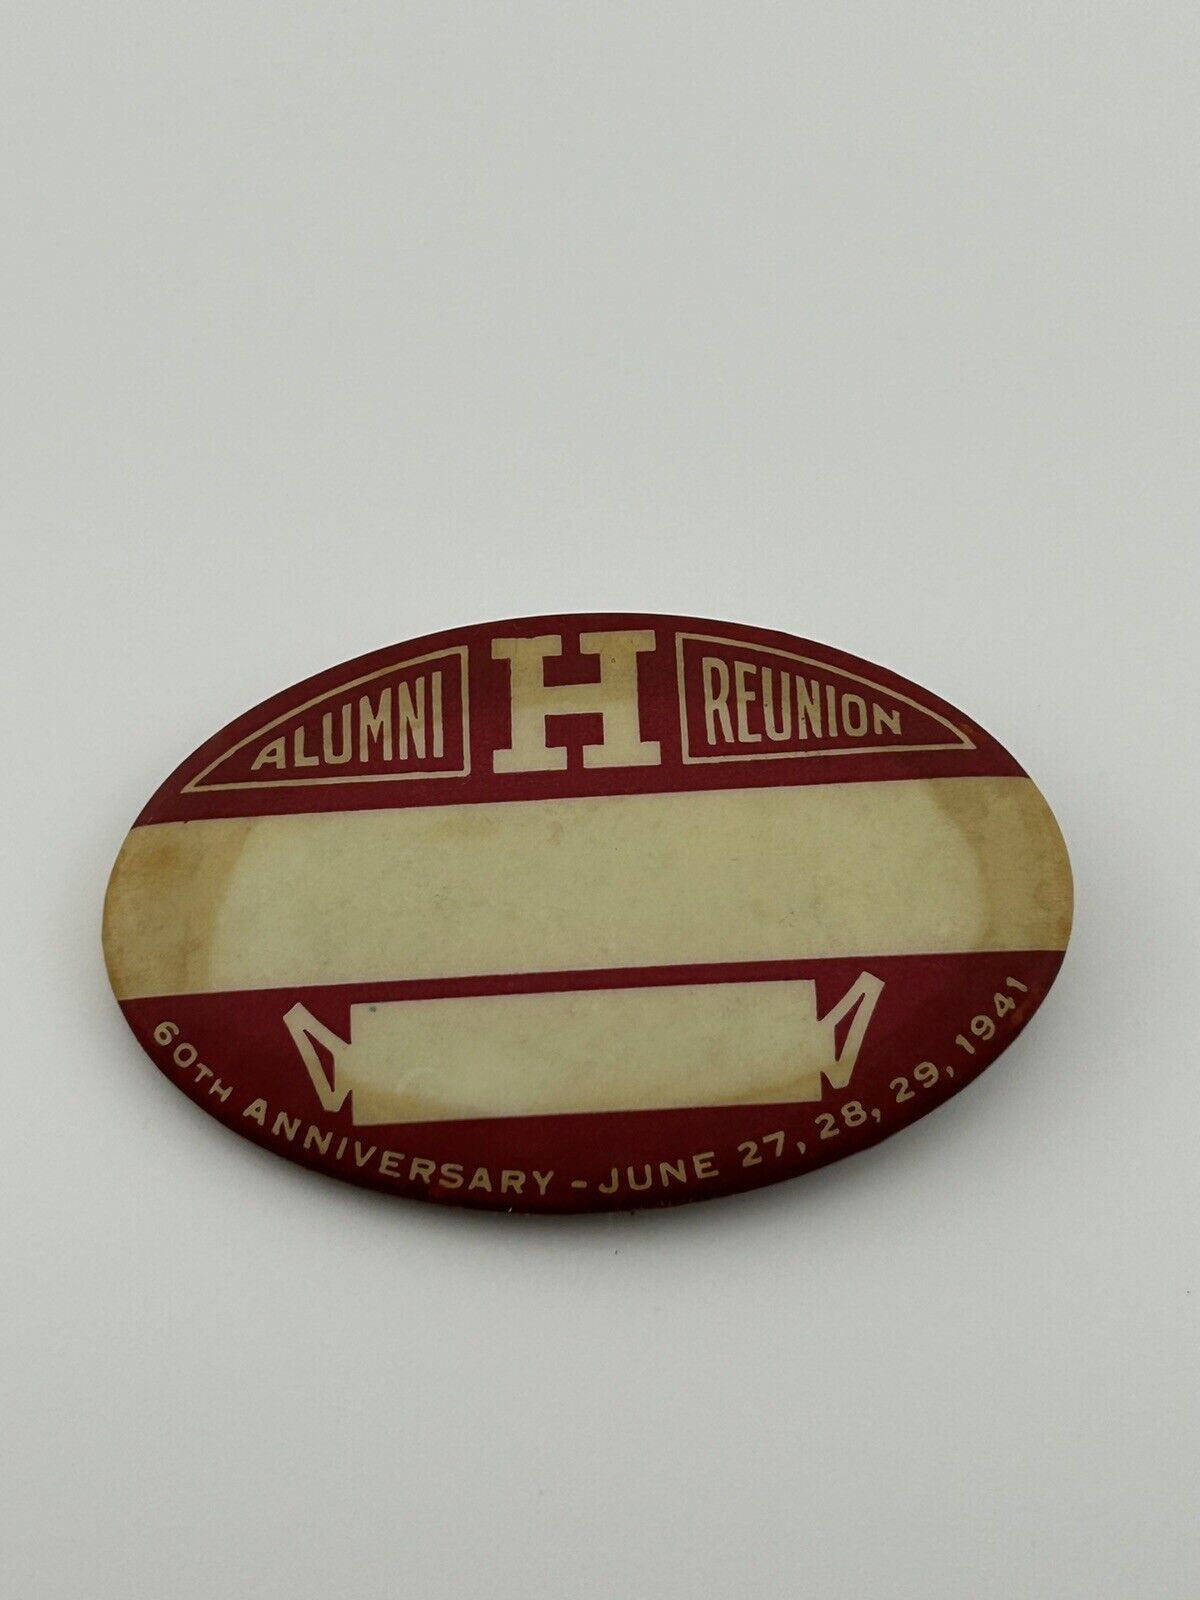 1940 HARVARD UNIVERSITY Alumni Reunion pin pinback button college sports